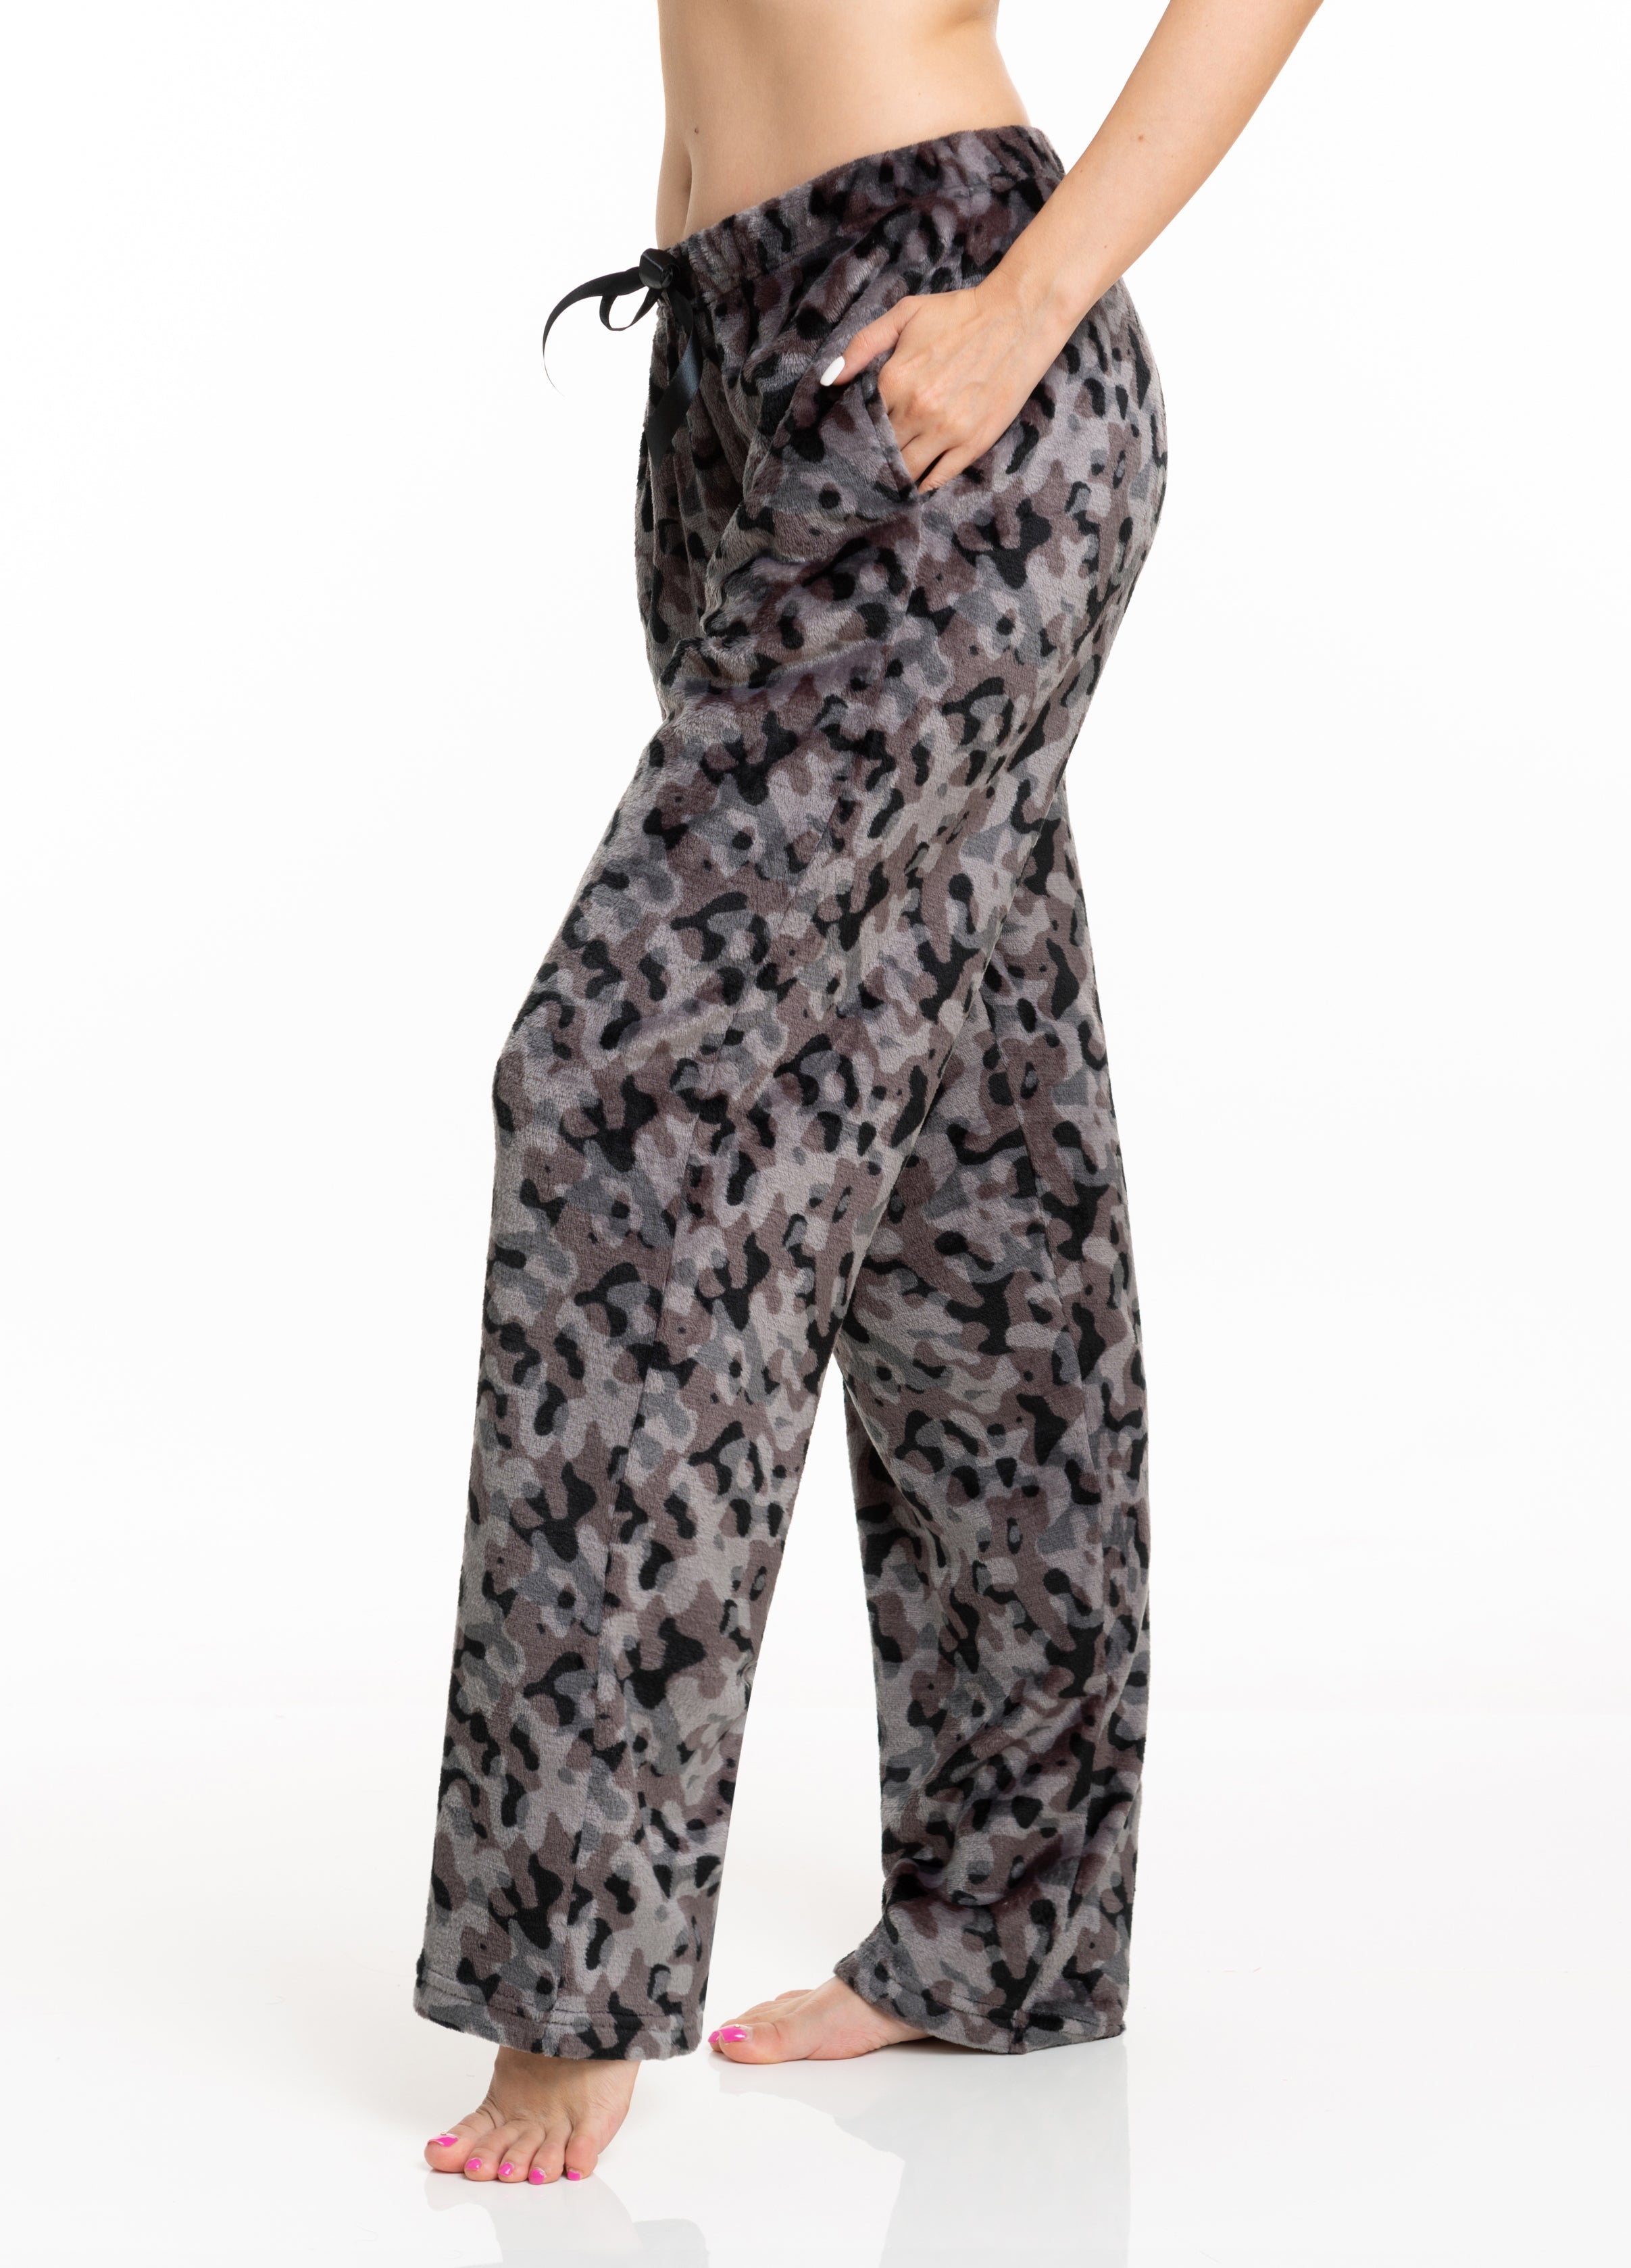 Women's Fleece Print Pajama Pants | 2 PACK